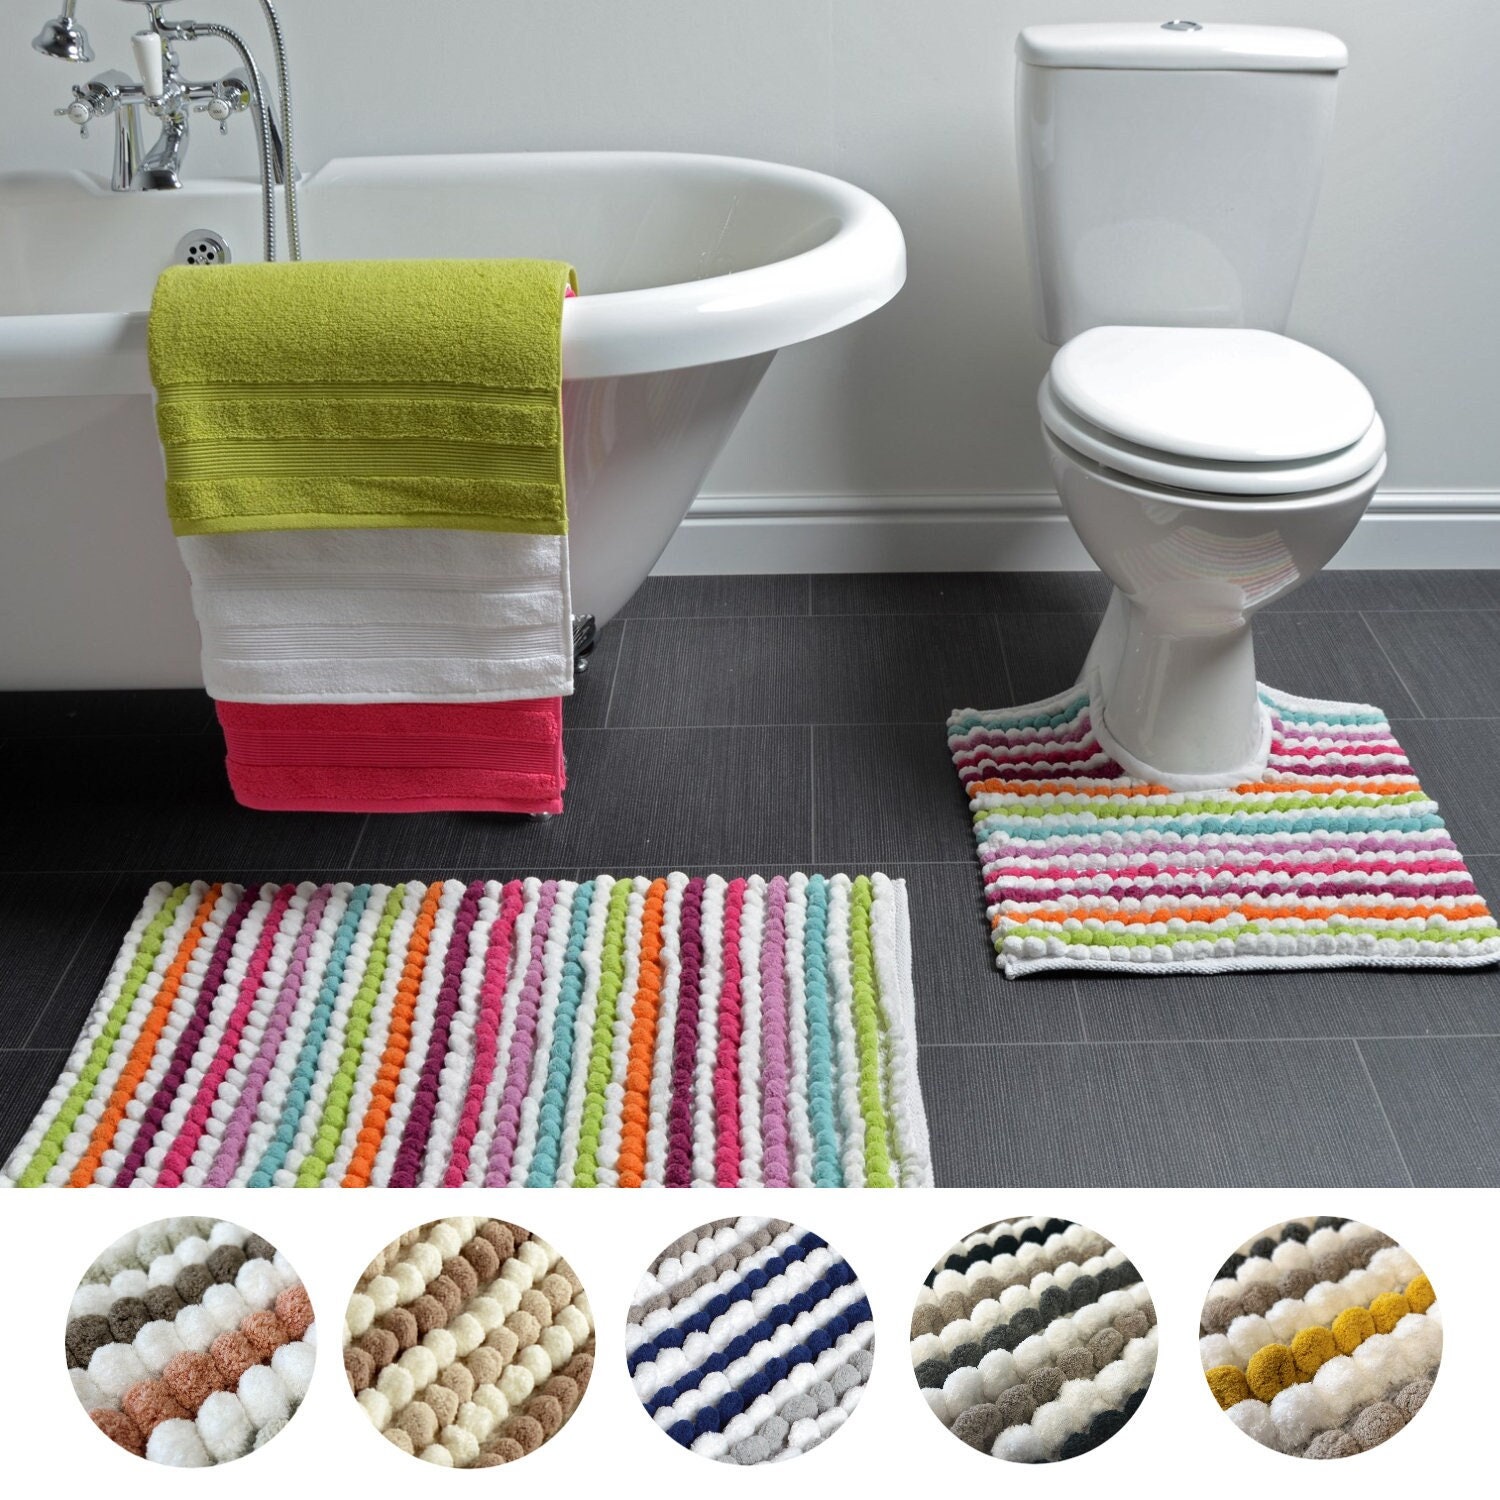 Bathroom Rugs by Karlesi,2 Piece Bath Mats Set, Soft Anti-Slip